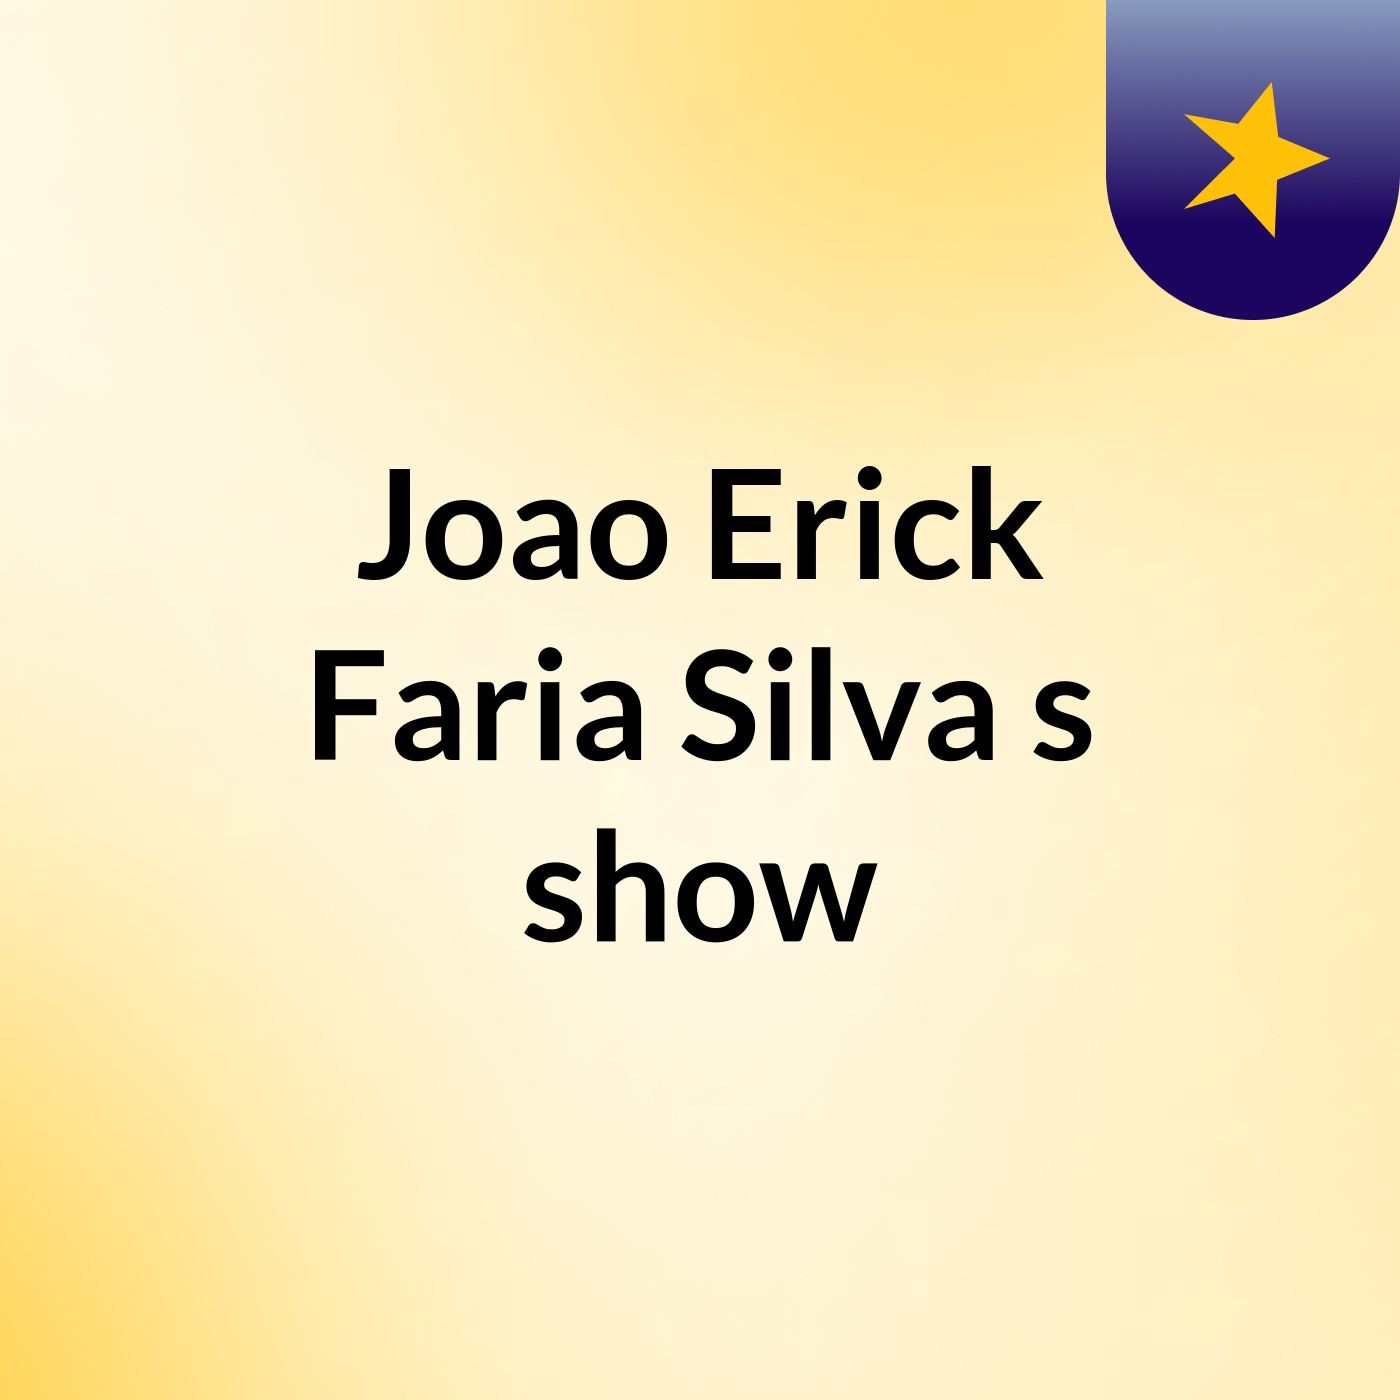 Joao Erick Faria Silva's show